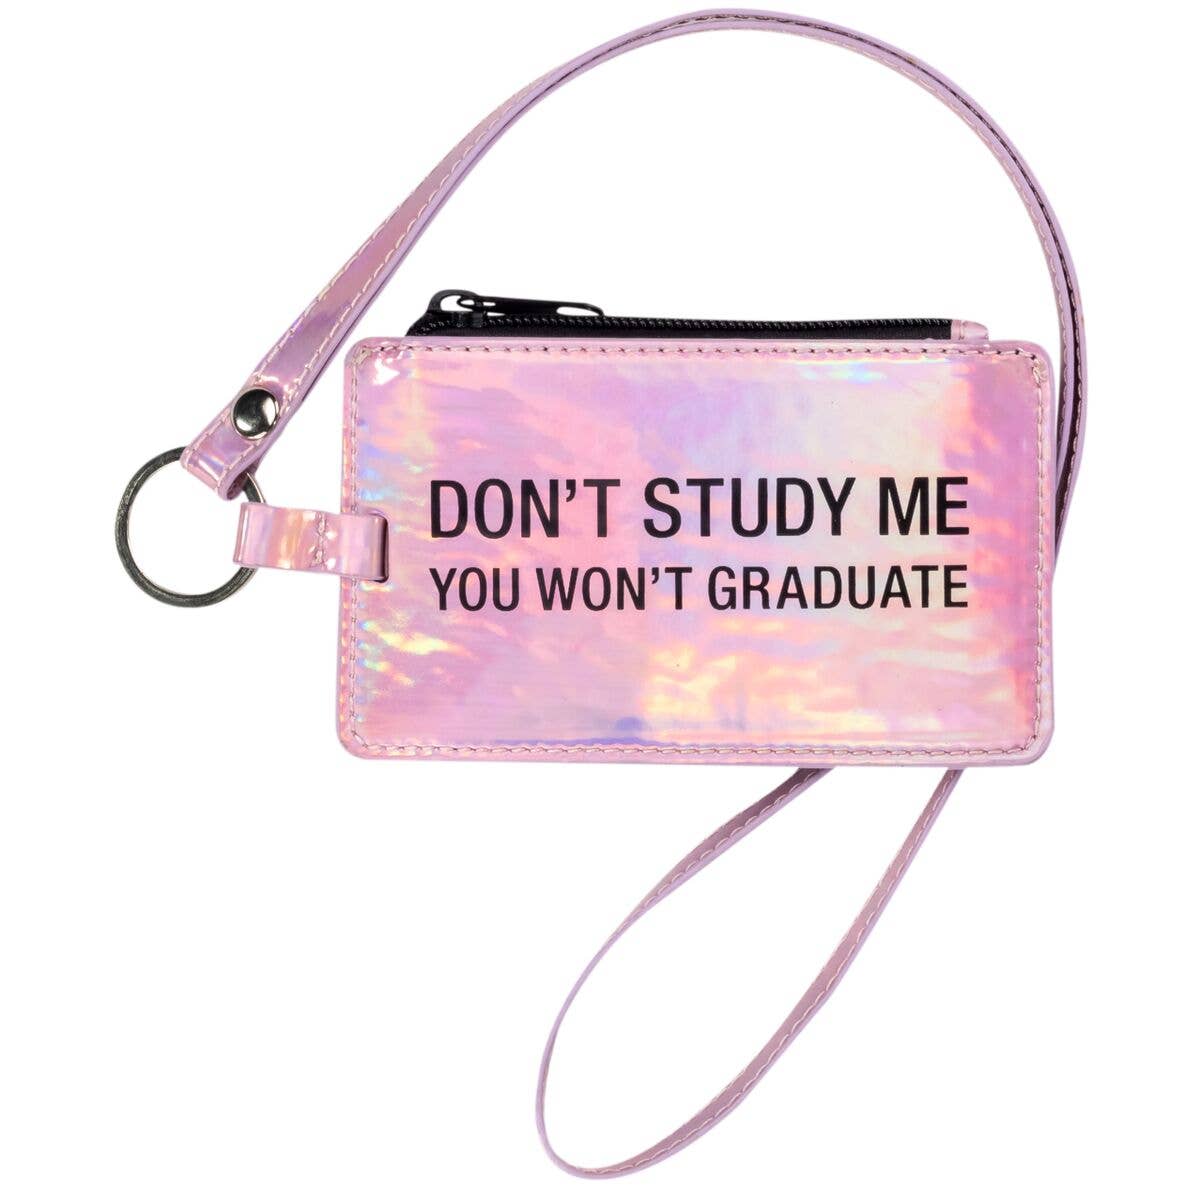 Don't Study Me You Won't Graduate - ID Lanyard